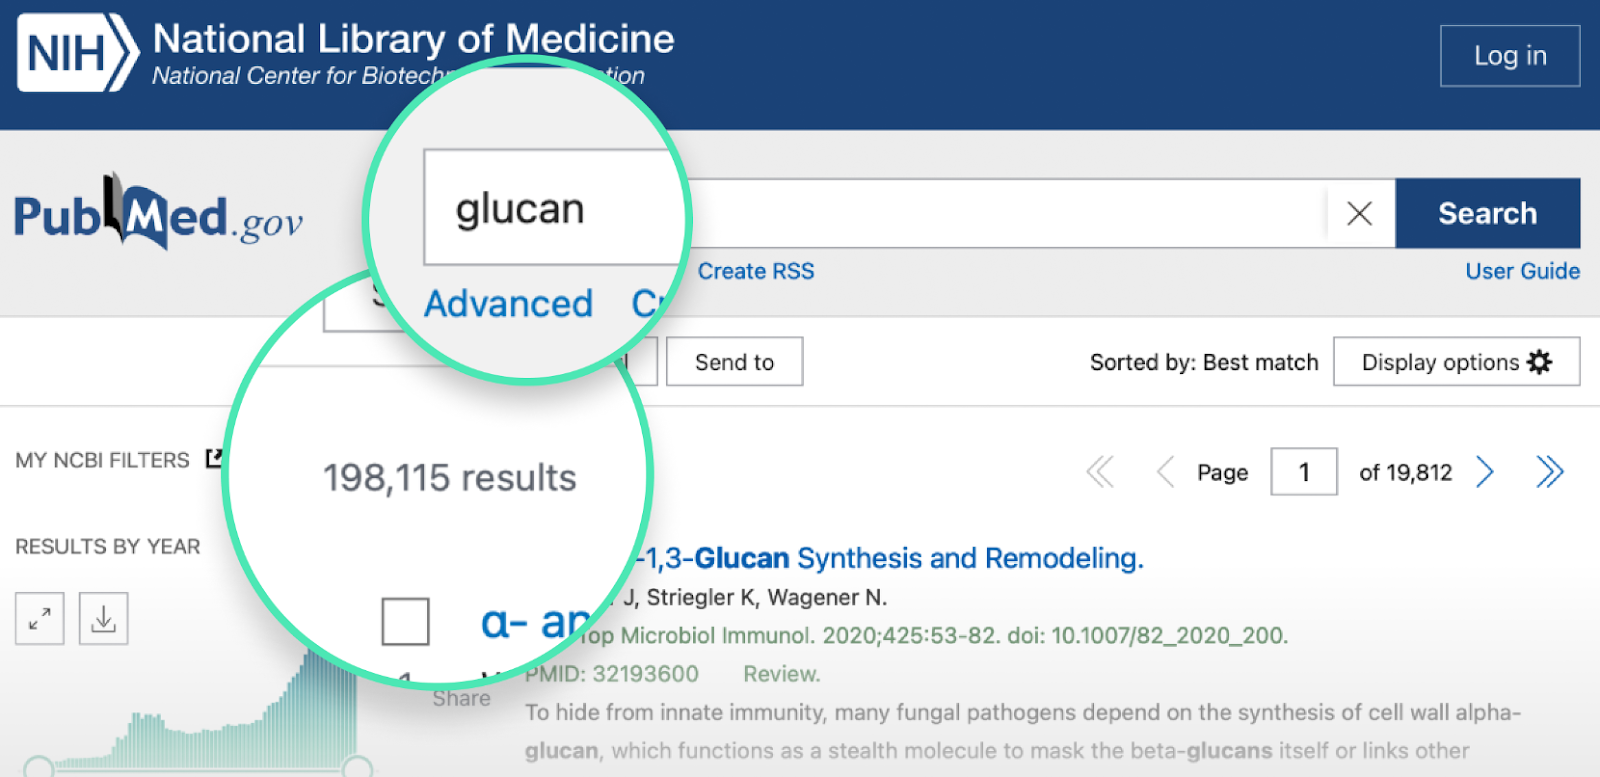 Hundreds of thousands of medical studies on beta-glucan exist on PubMed.com